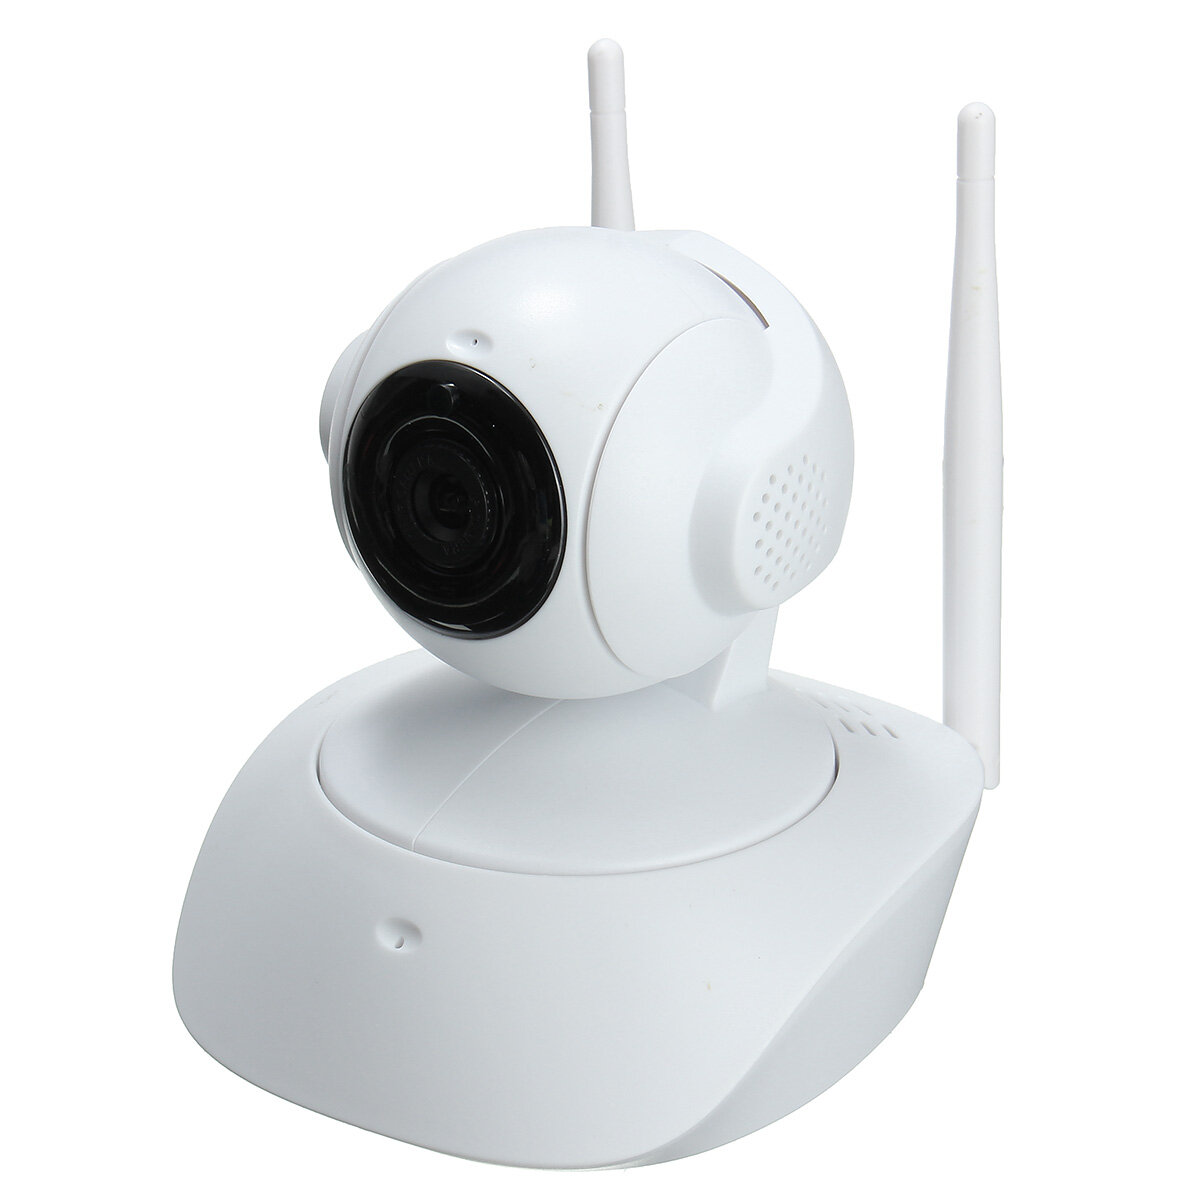 Wireless WiFi 720P HD Network CCTV HOME Security IP Camera